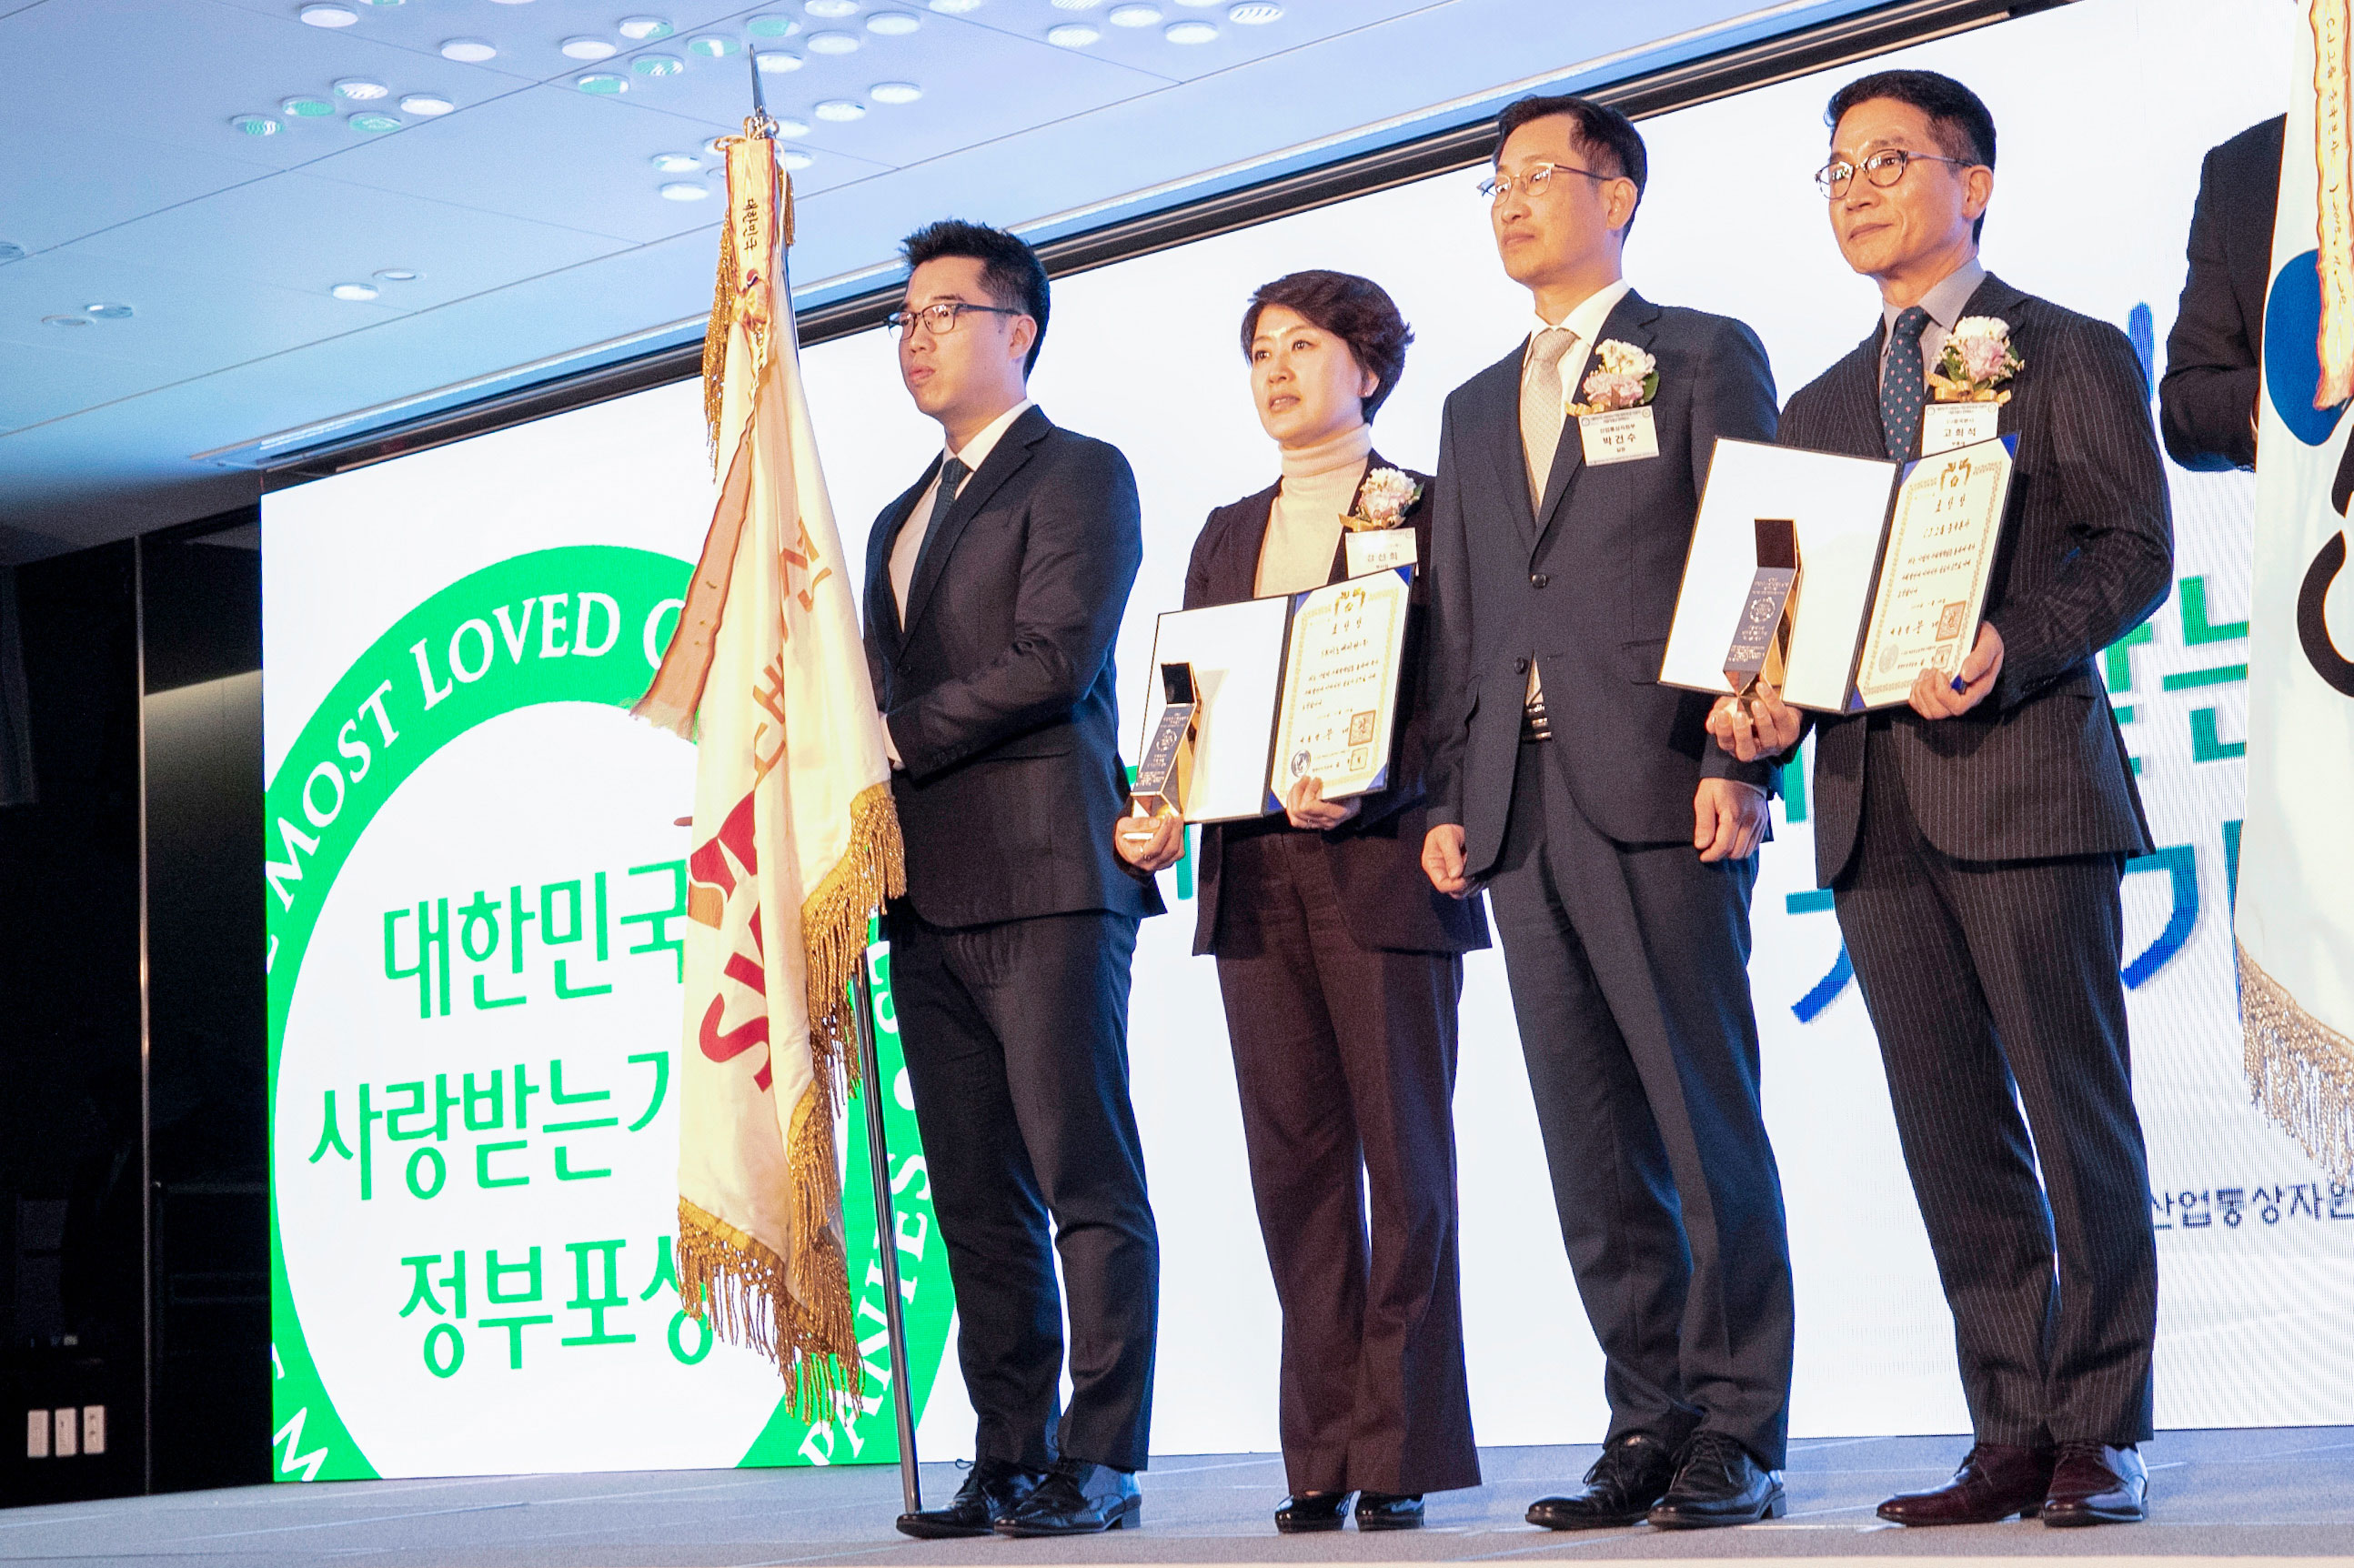 SK이노베이션 강선희 부사장(왼쪽 두 번째)와 산업통상자원부 박건수 실장(왼쪽 세 번째)이 대통령표창 수상 이후 기념사진을 촬영하고 있다.